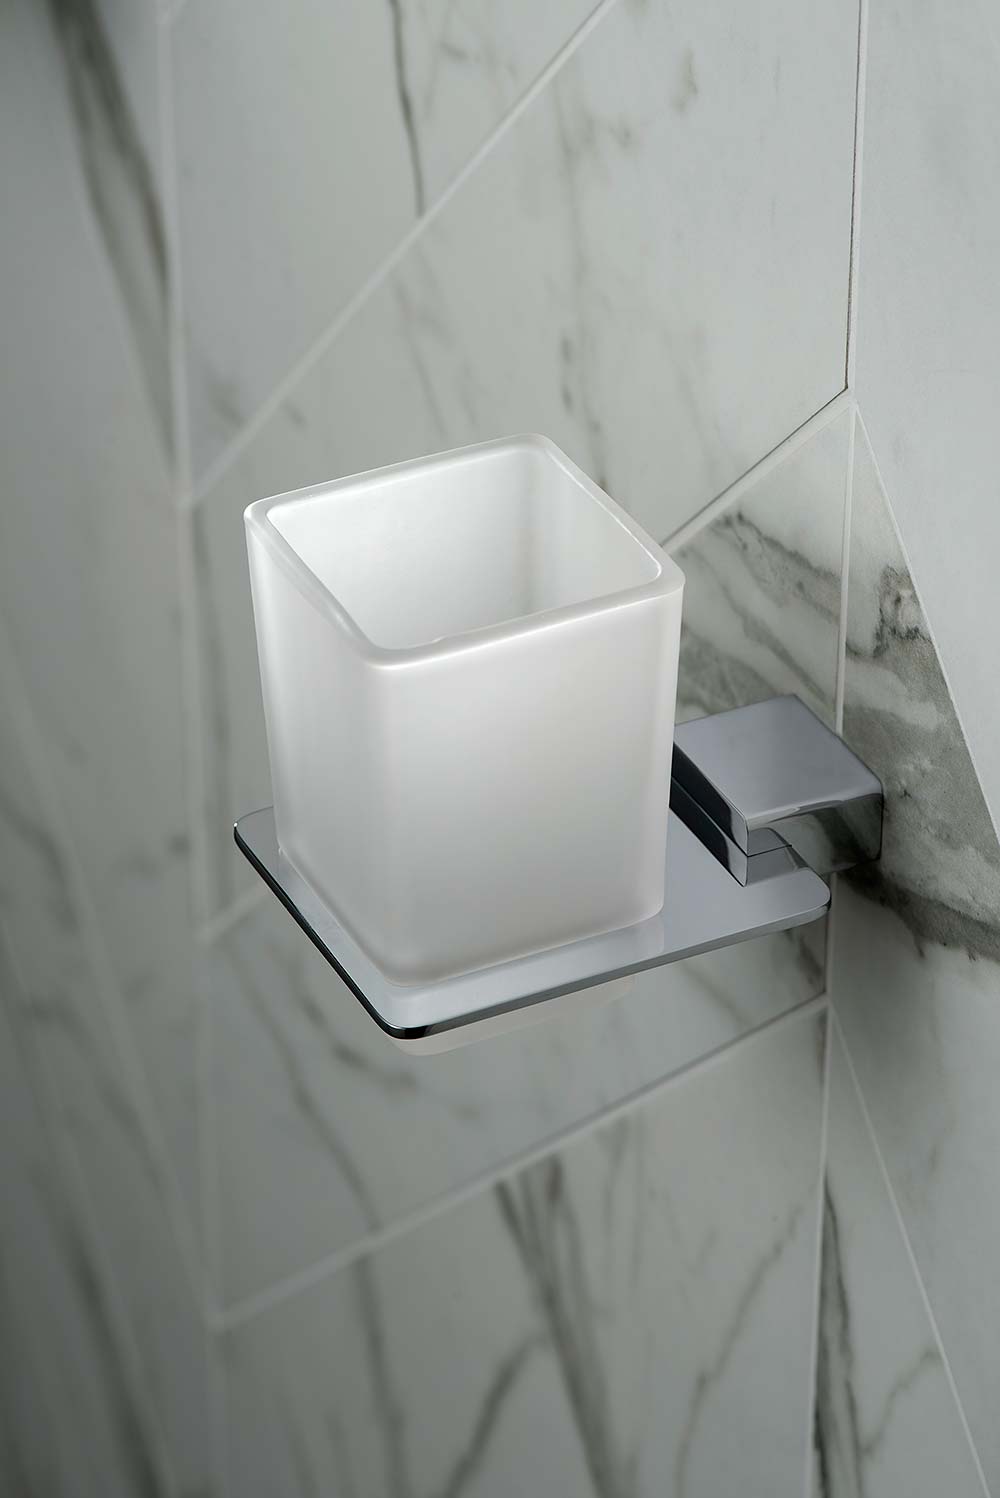 Modern chrome square tumbler and holder on diagonal marble tiles.